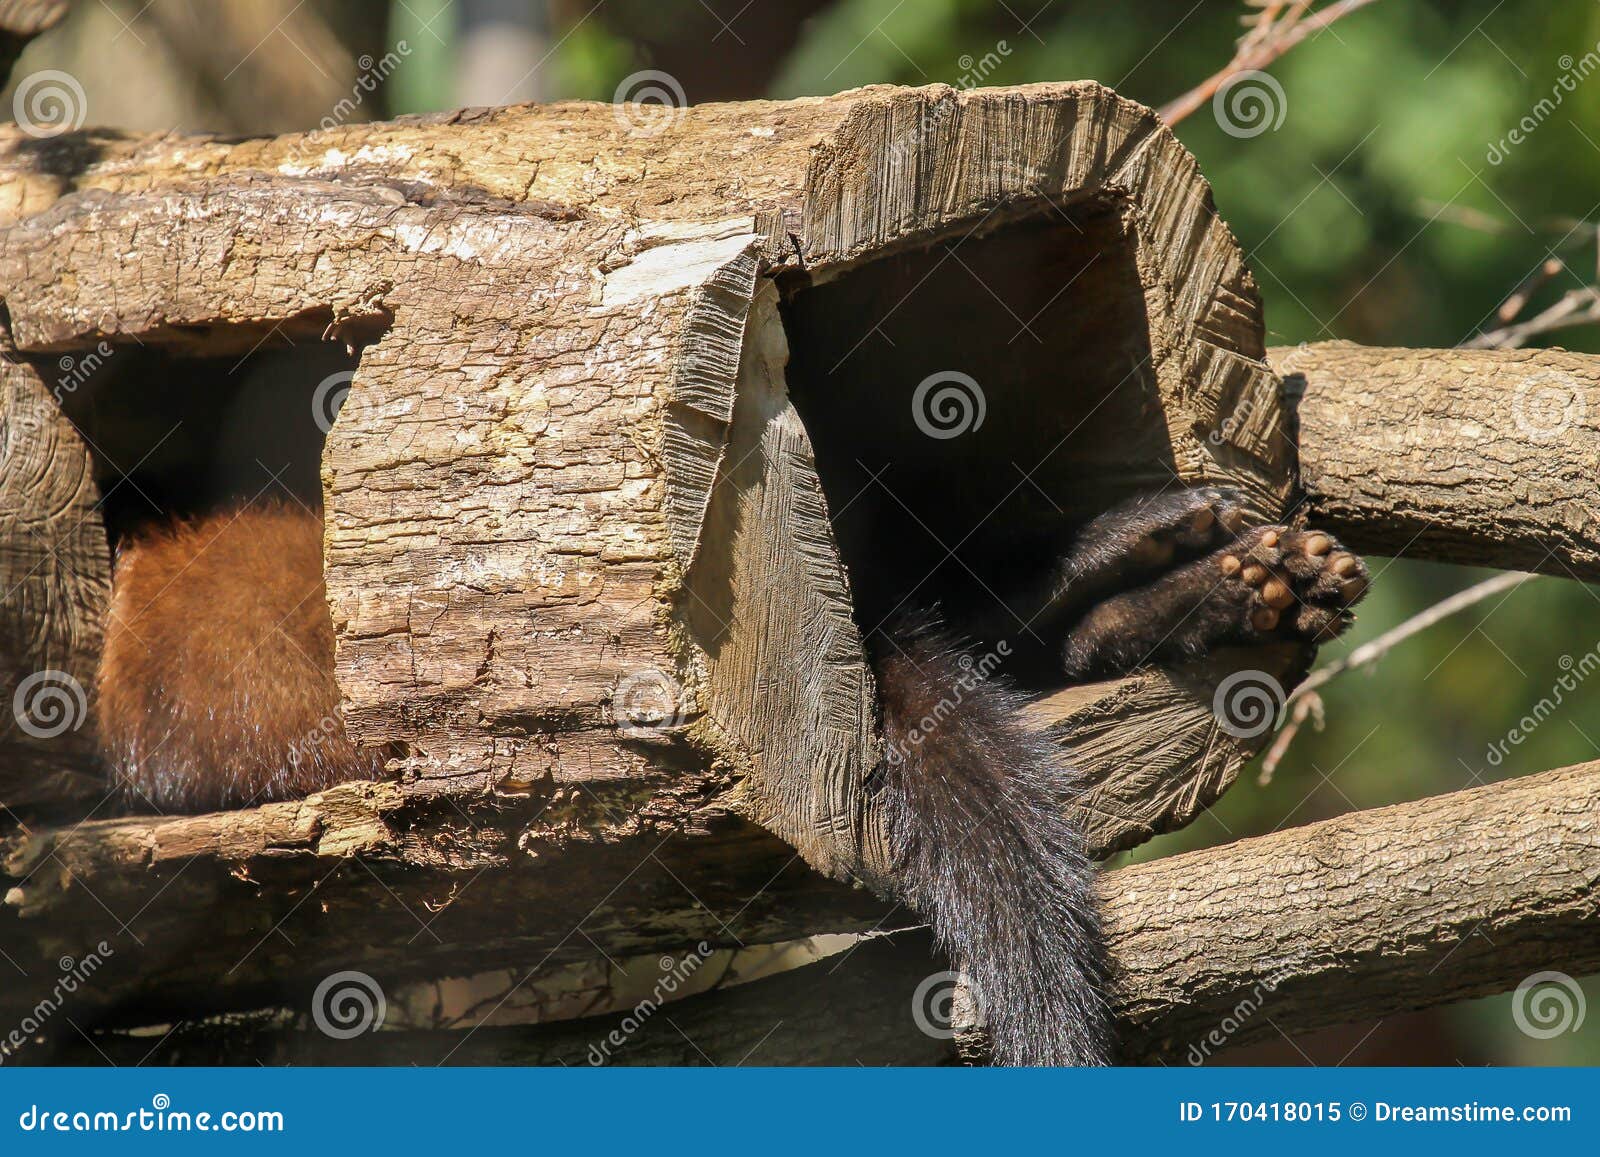 pekan sleeping in a tree trunk